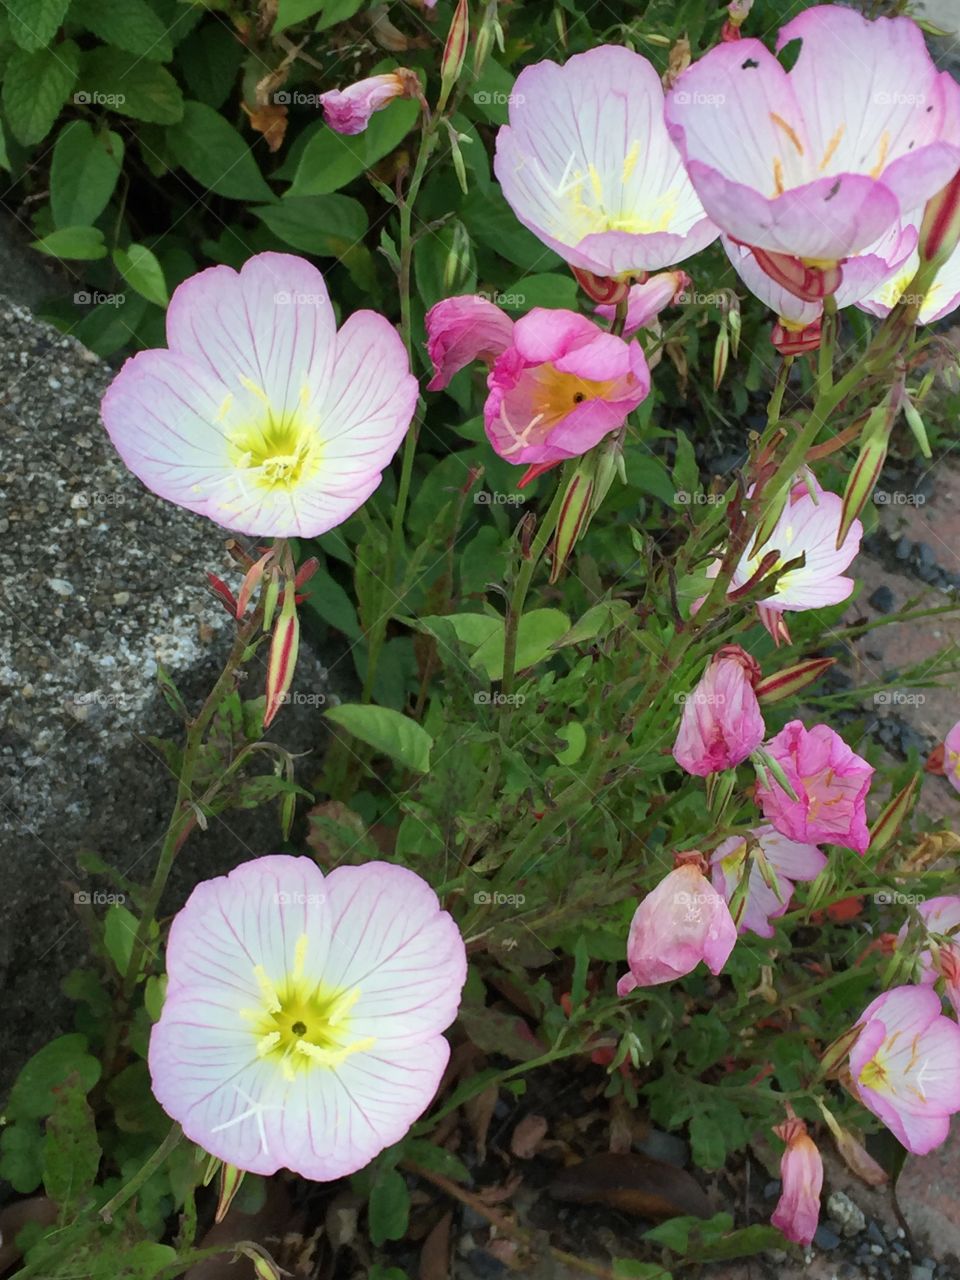 Flowers found in Yakushima